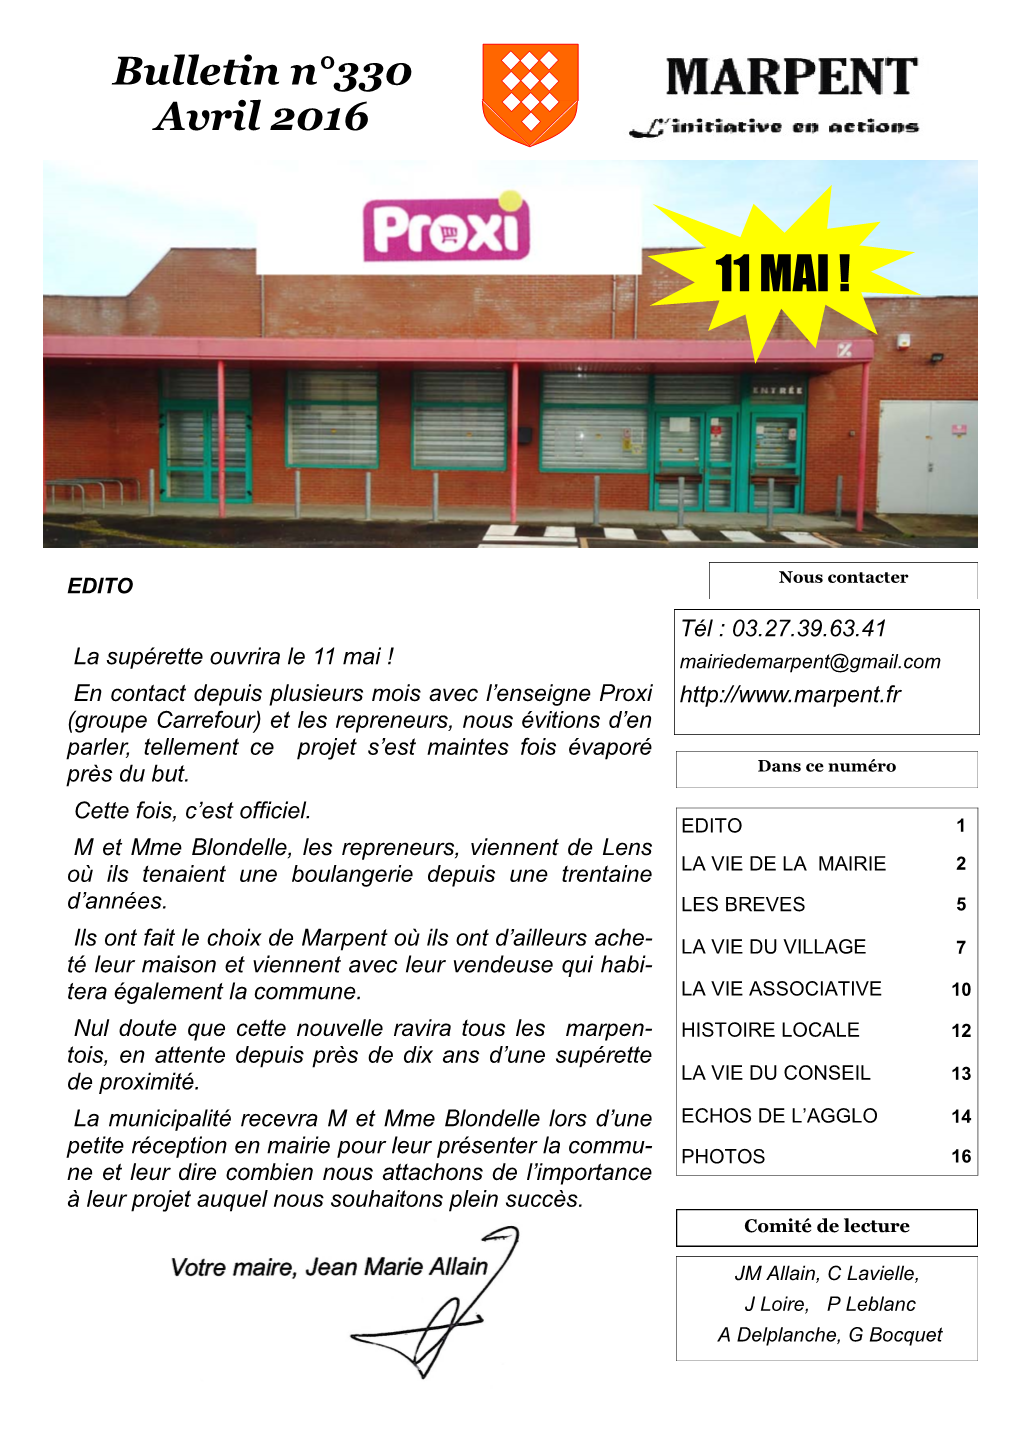 Bulletin Municipal De La Ville De Recquignies